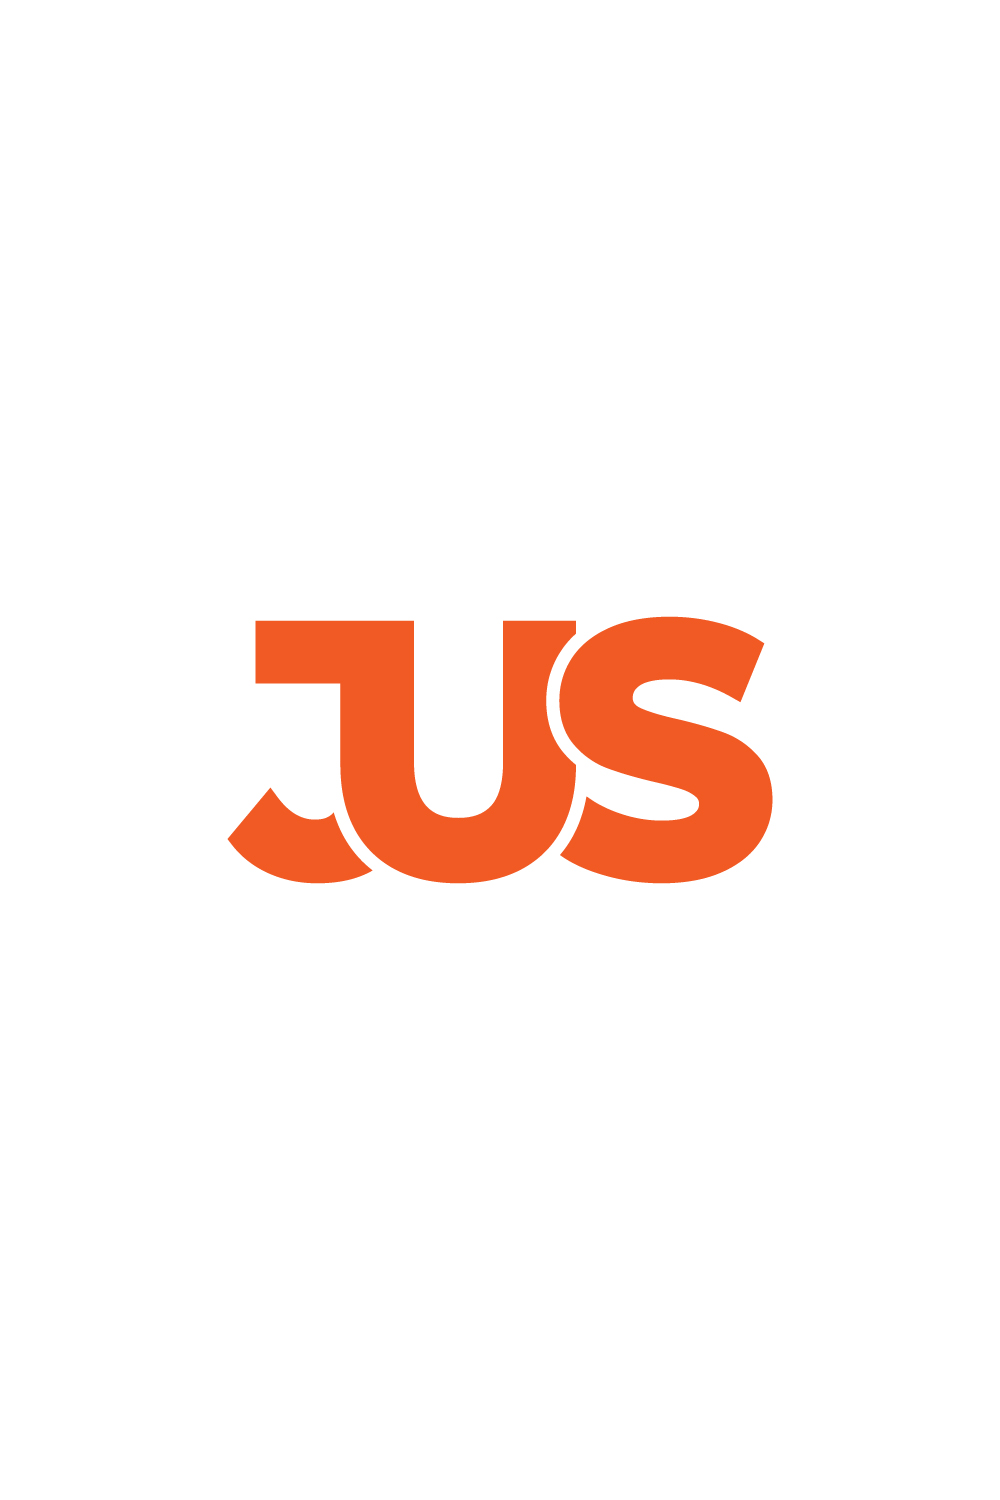 JUS Letter Logo design pinterest preview image.